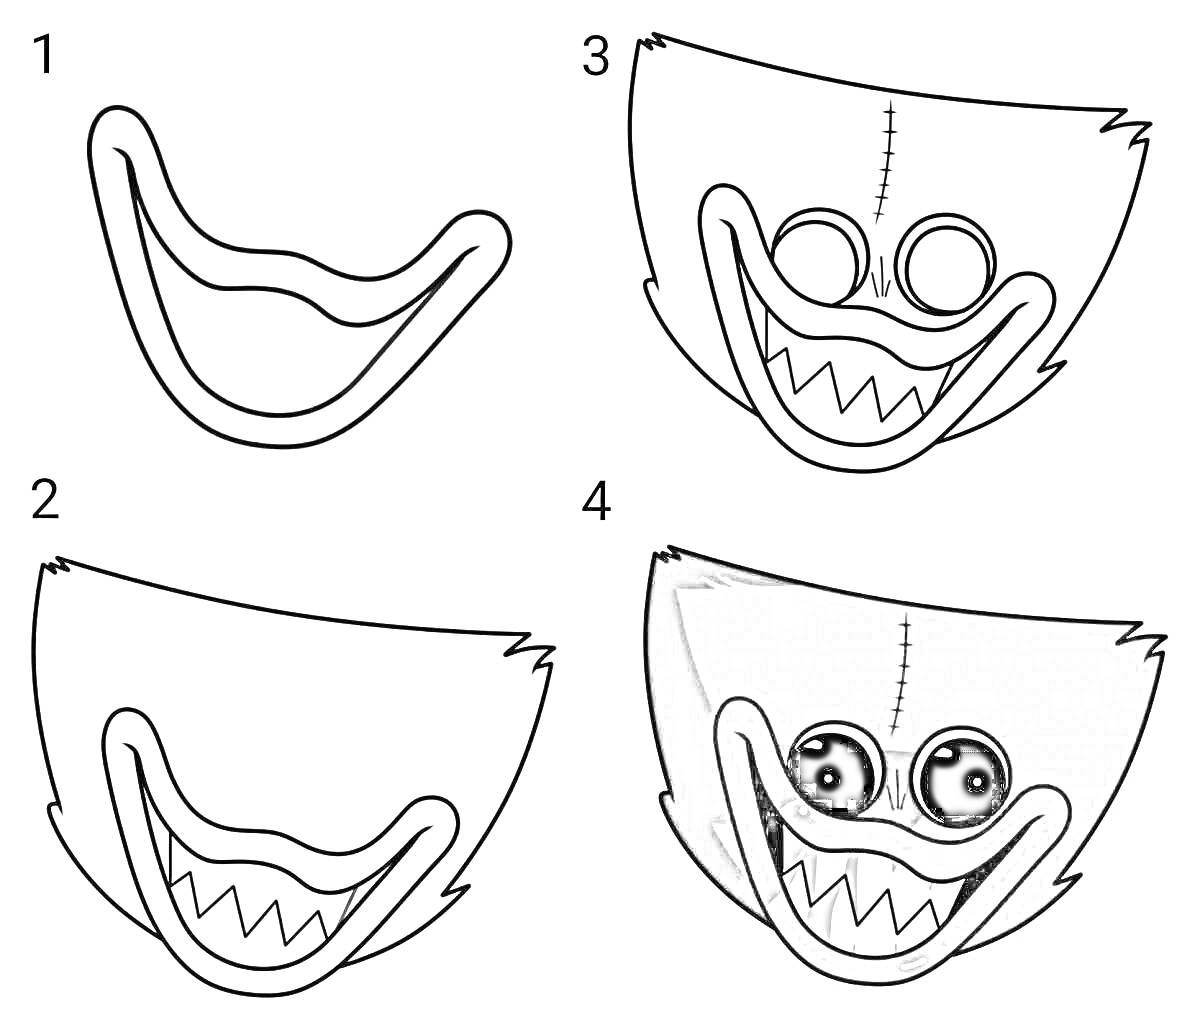 Раскраска Процесс раскраски персонажа Хаги Ваги с четырьмя шагами